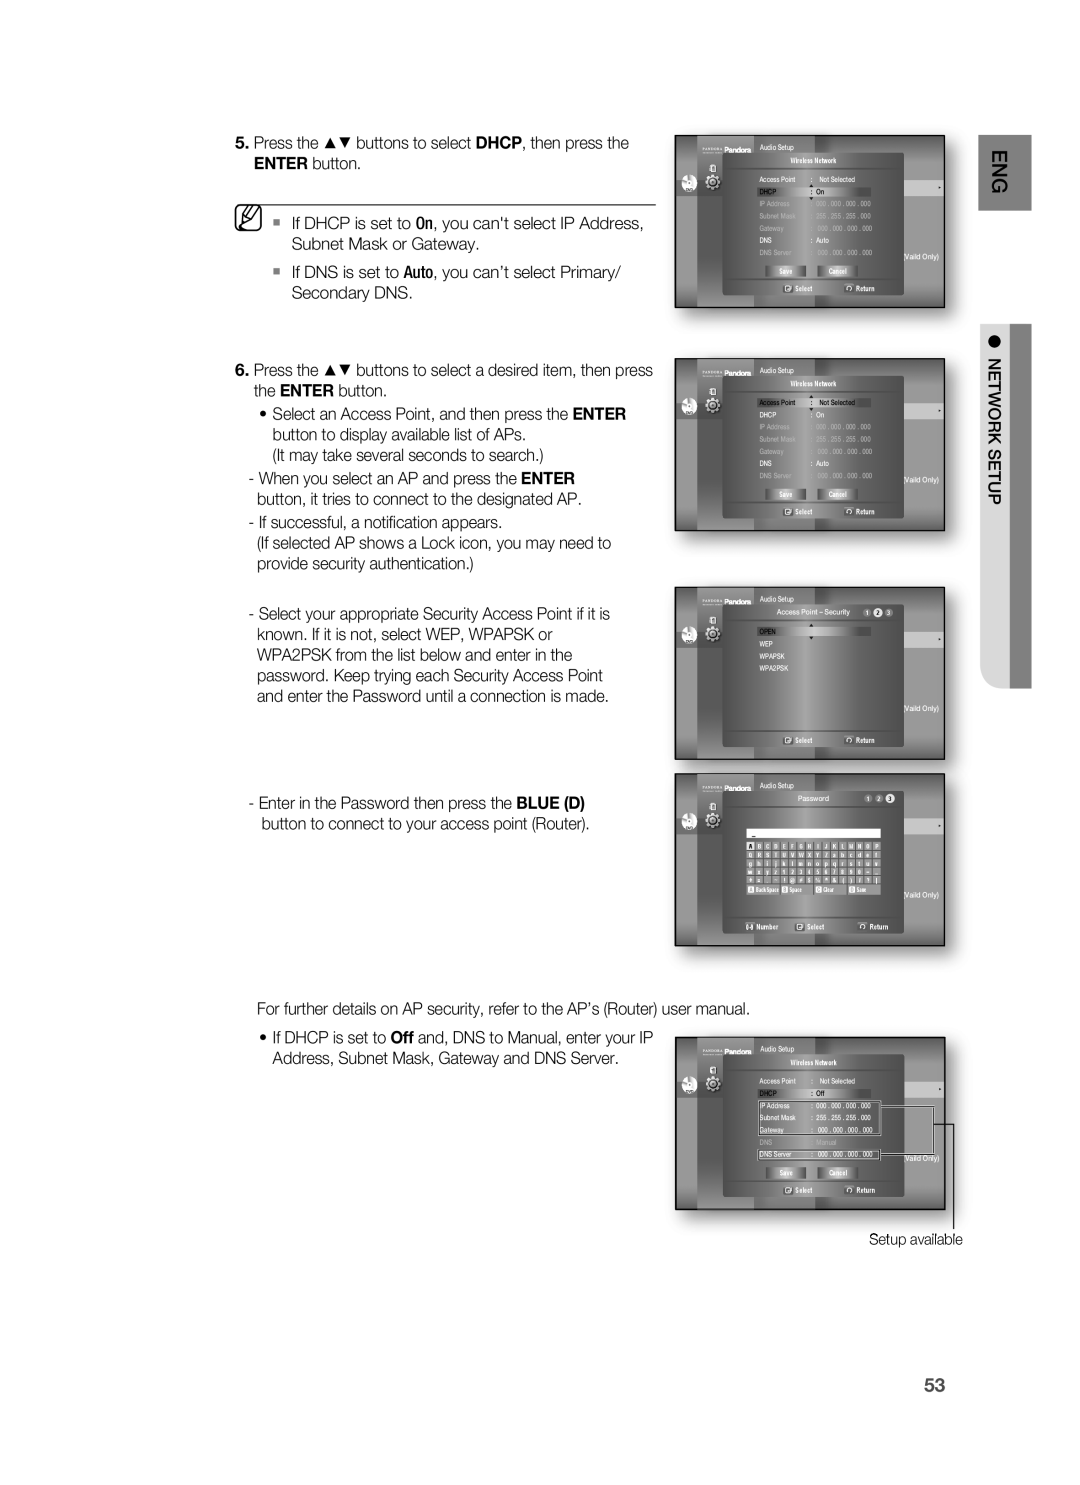 Samsung HT-BD1200, AH68-02178Z user manual Setup available 